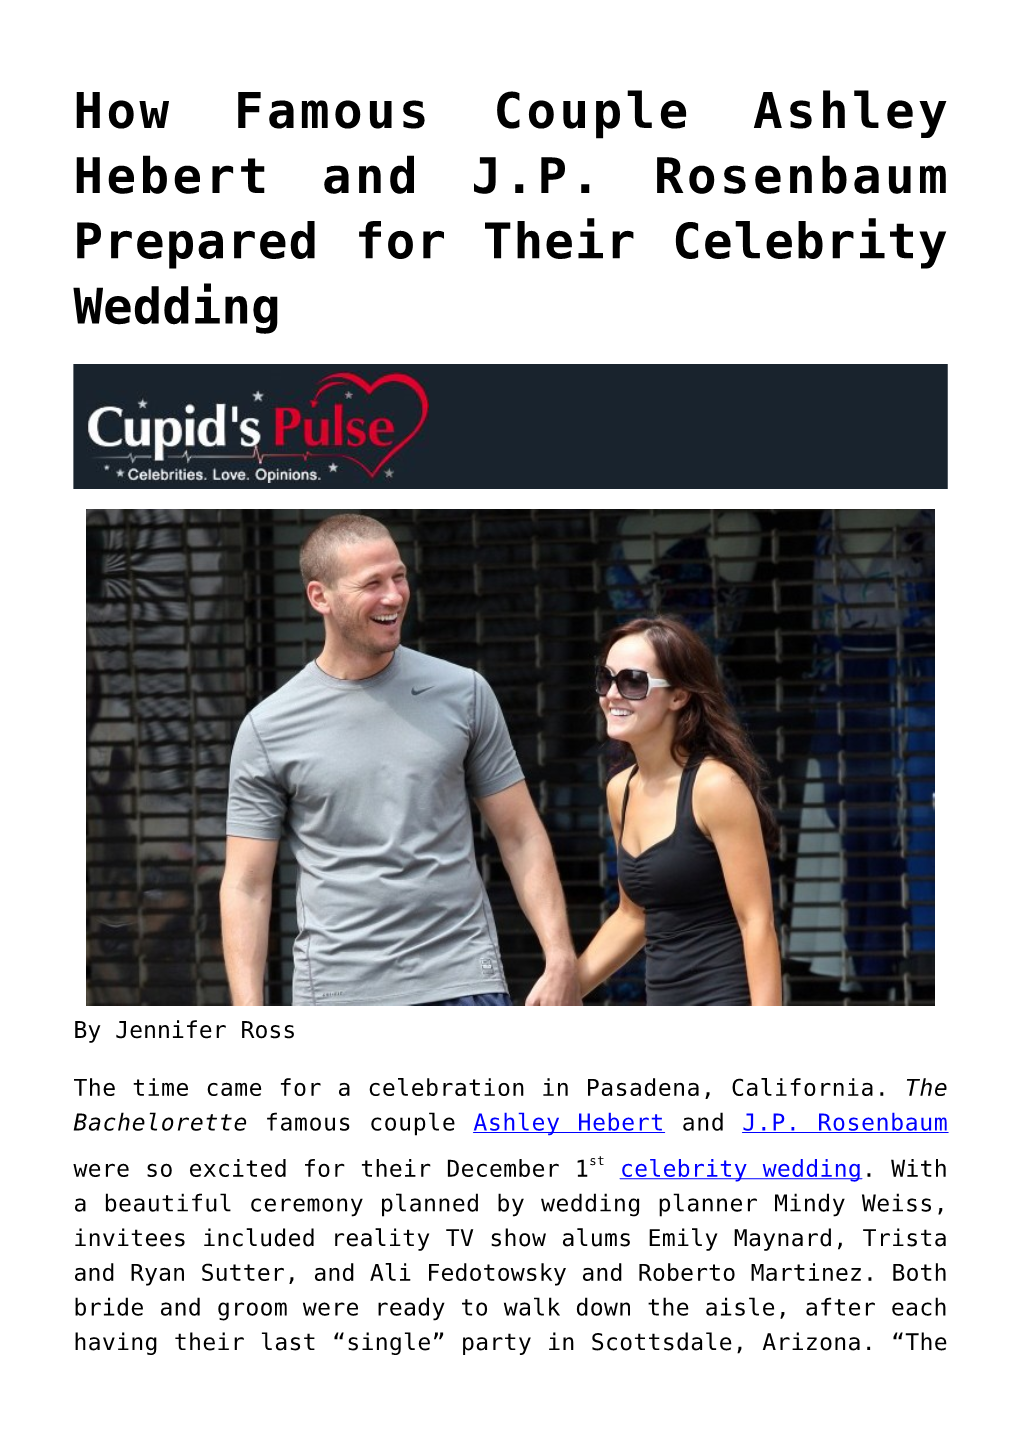 How Famous Couple Ashley Hebert and J.P. Rosenbaum Prepared for Their Celebrity Wedding